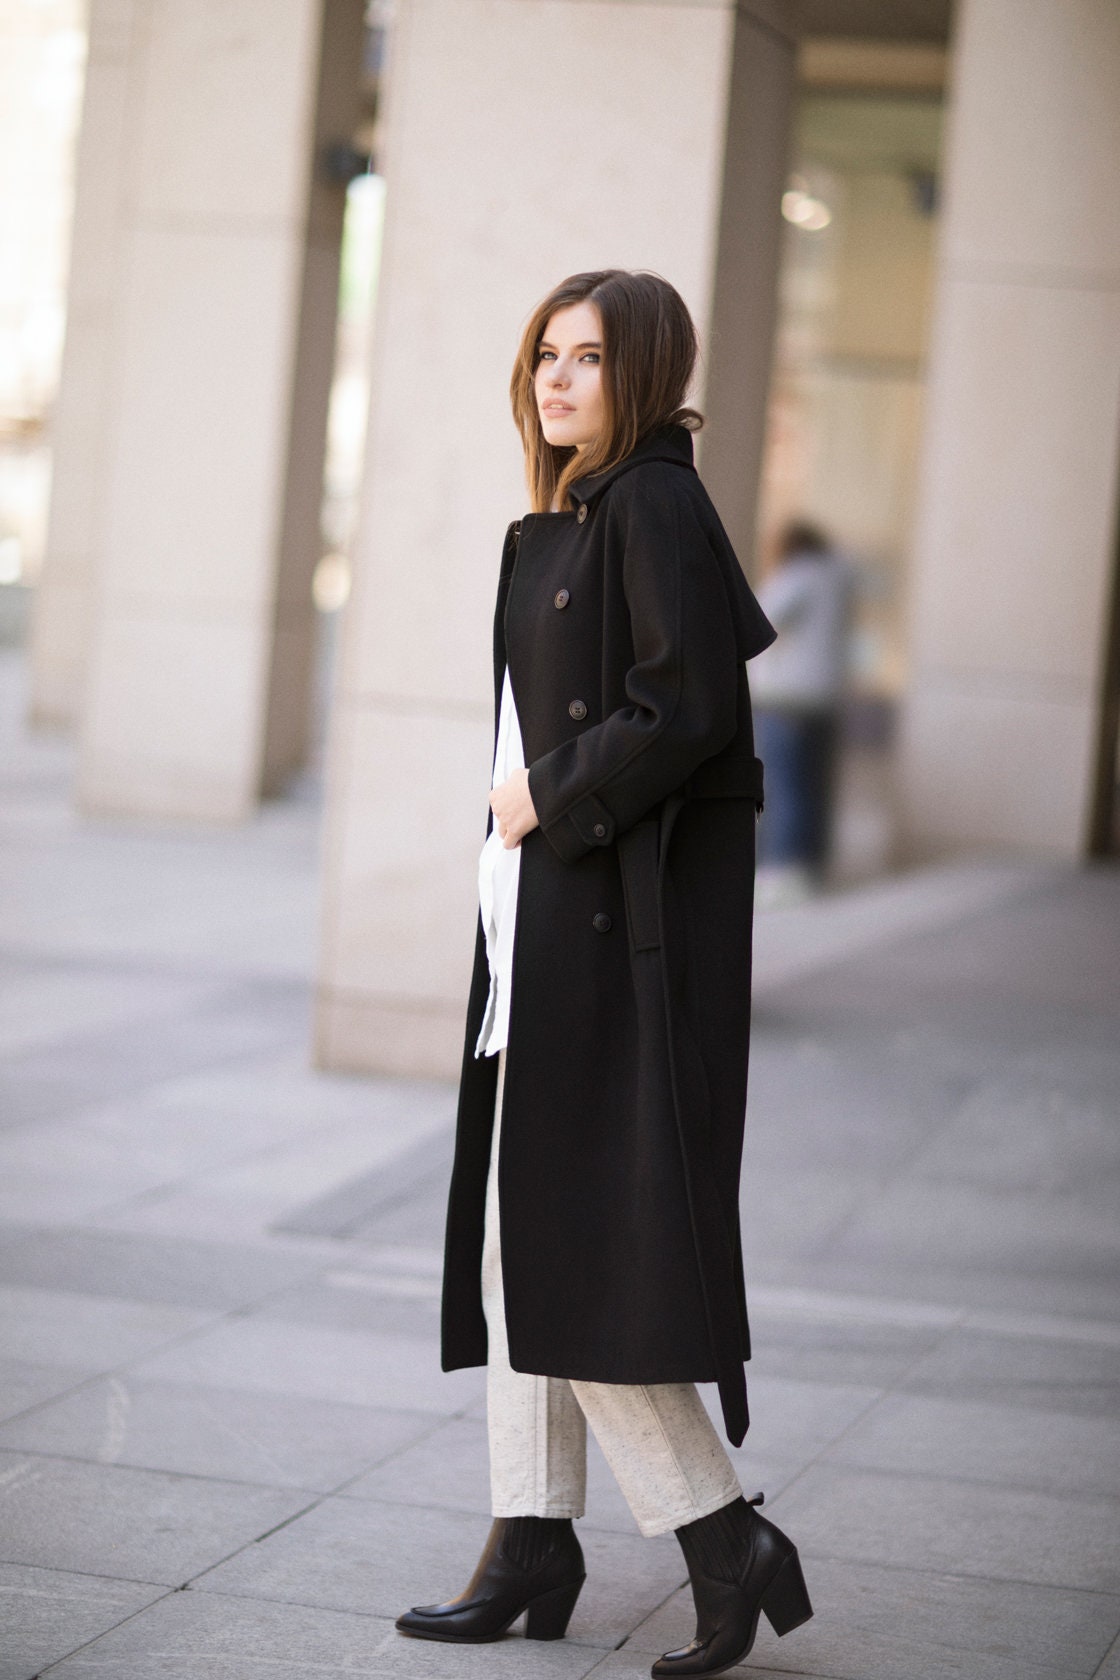 Black Cashmere Coat / Cashmere Warm Coat / Autumn Coat | Etsy